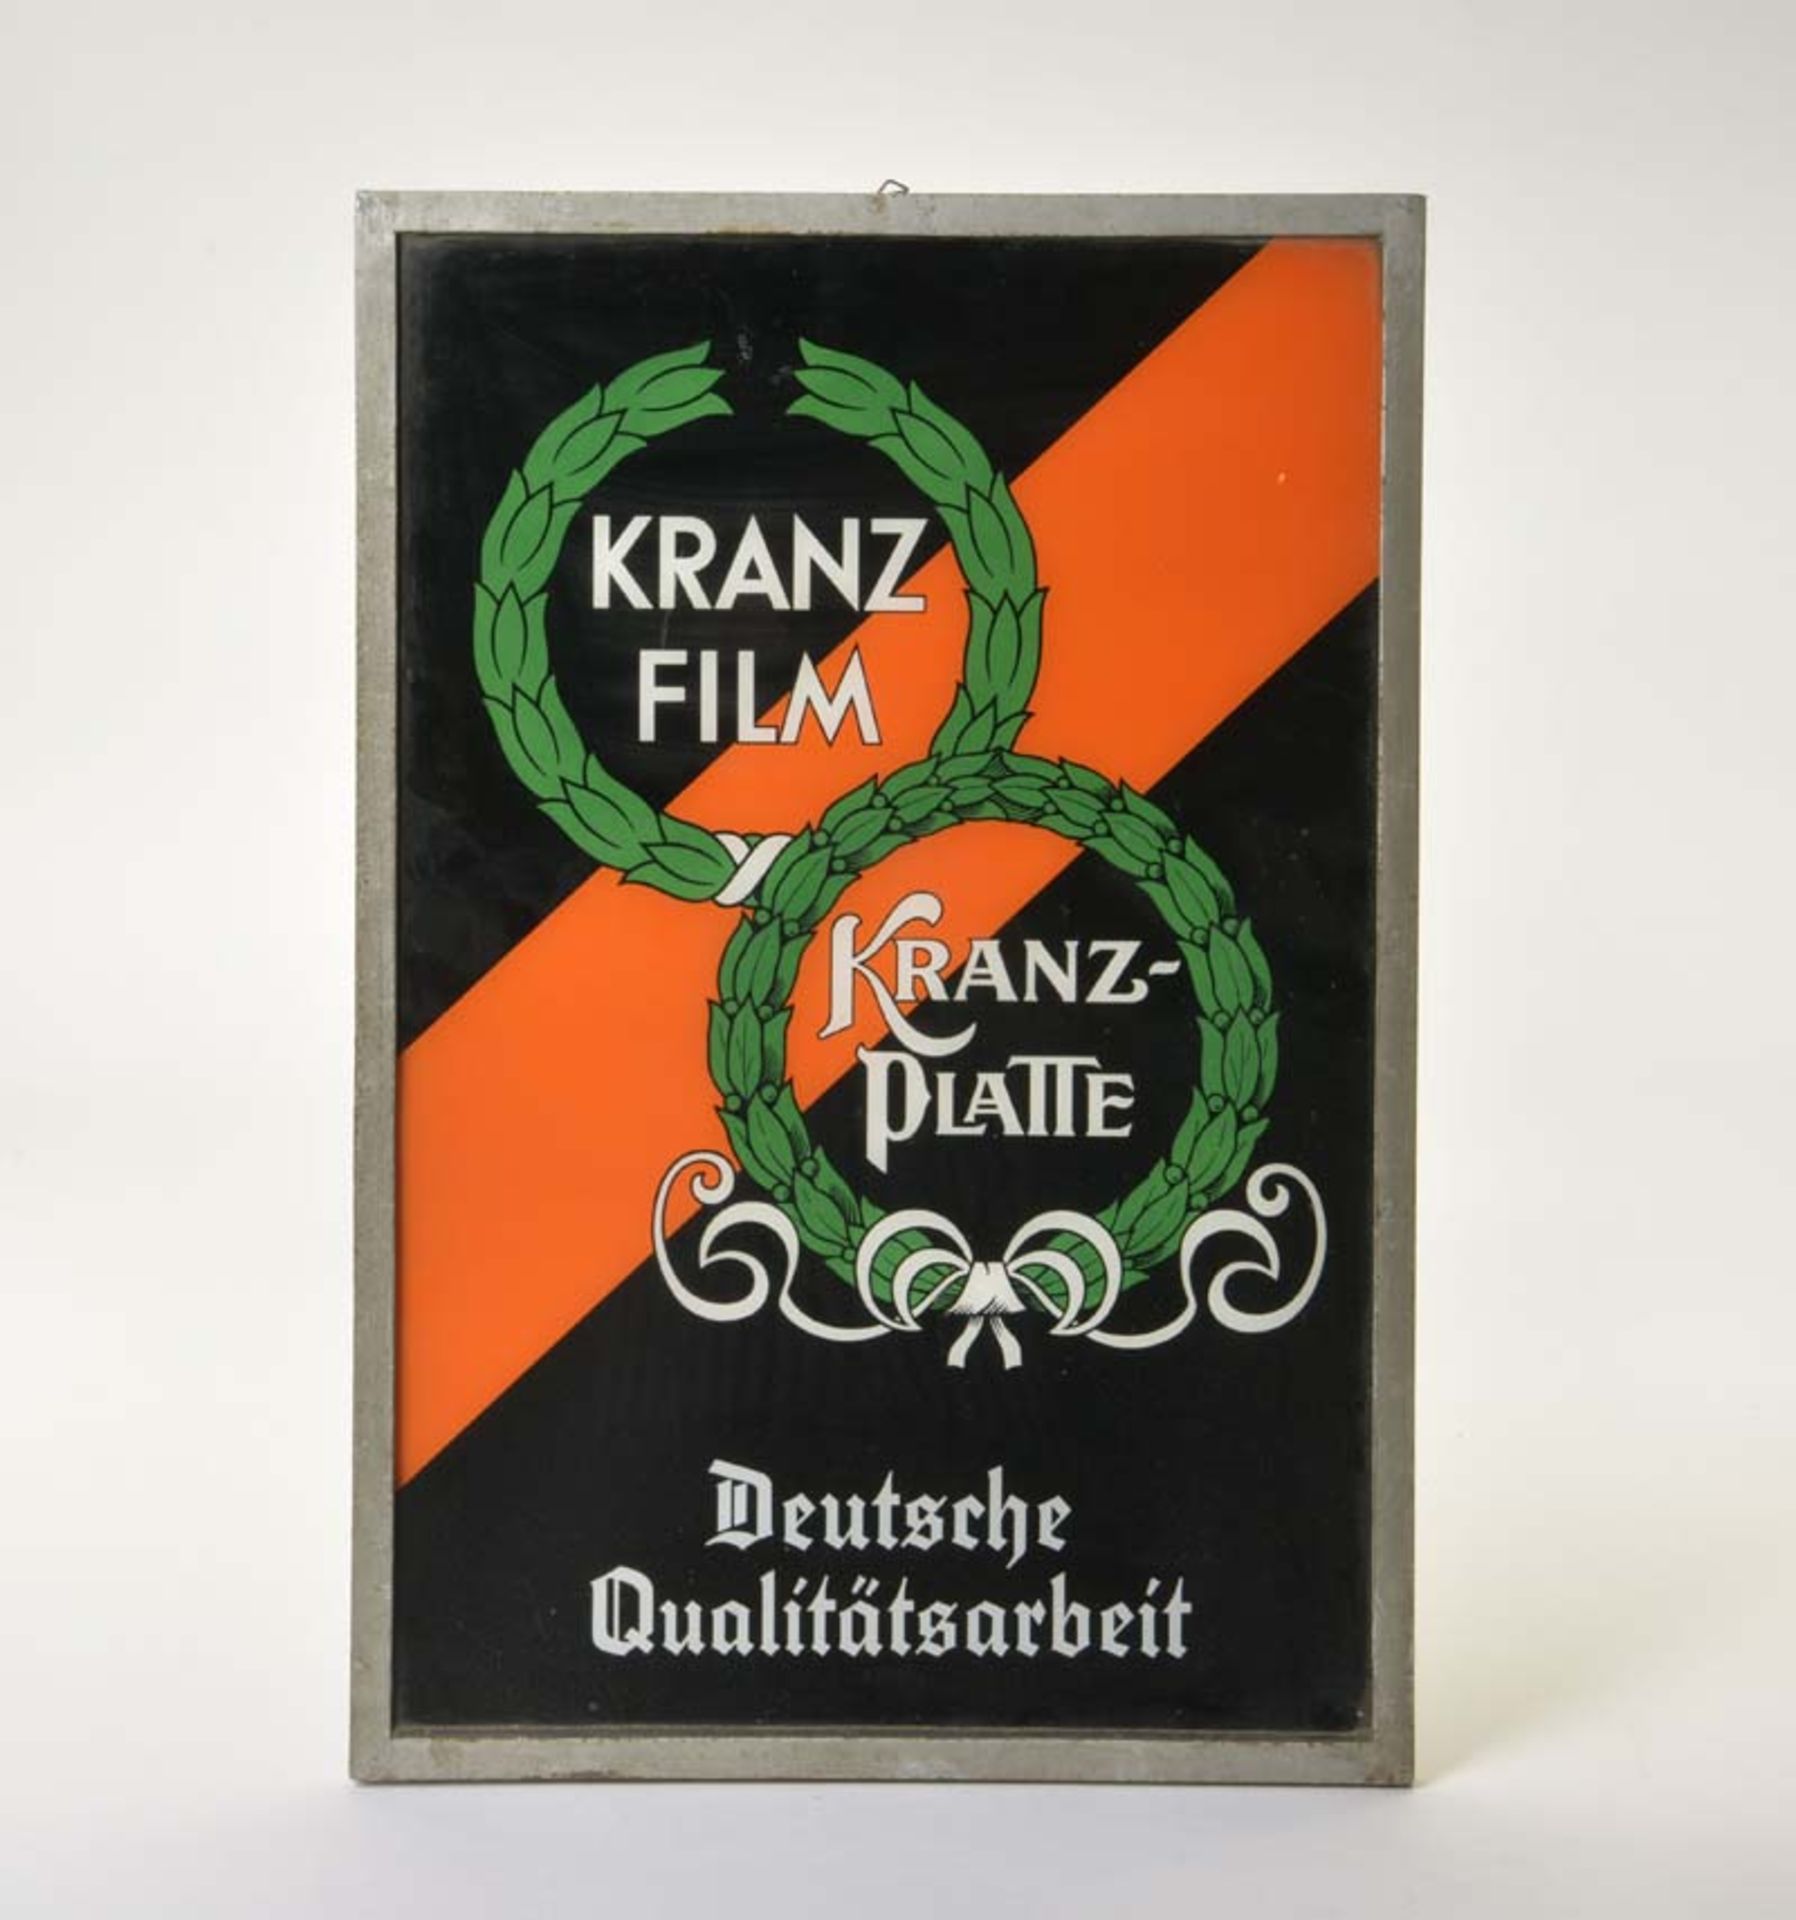 Glass Sign "Kranz Film, Deutsche Qualitätsarbeit", Germany, min. traces of age on frame, otherwise